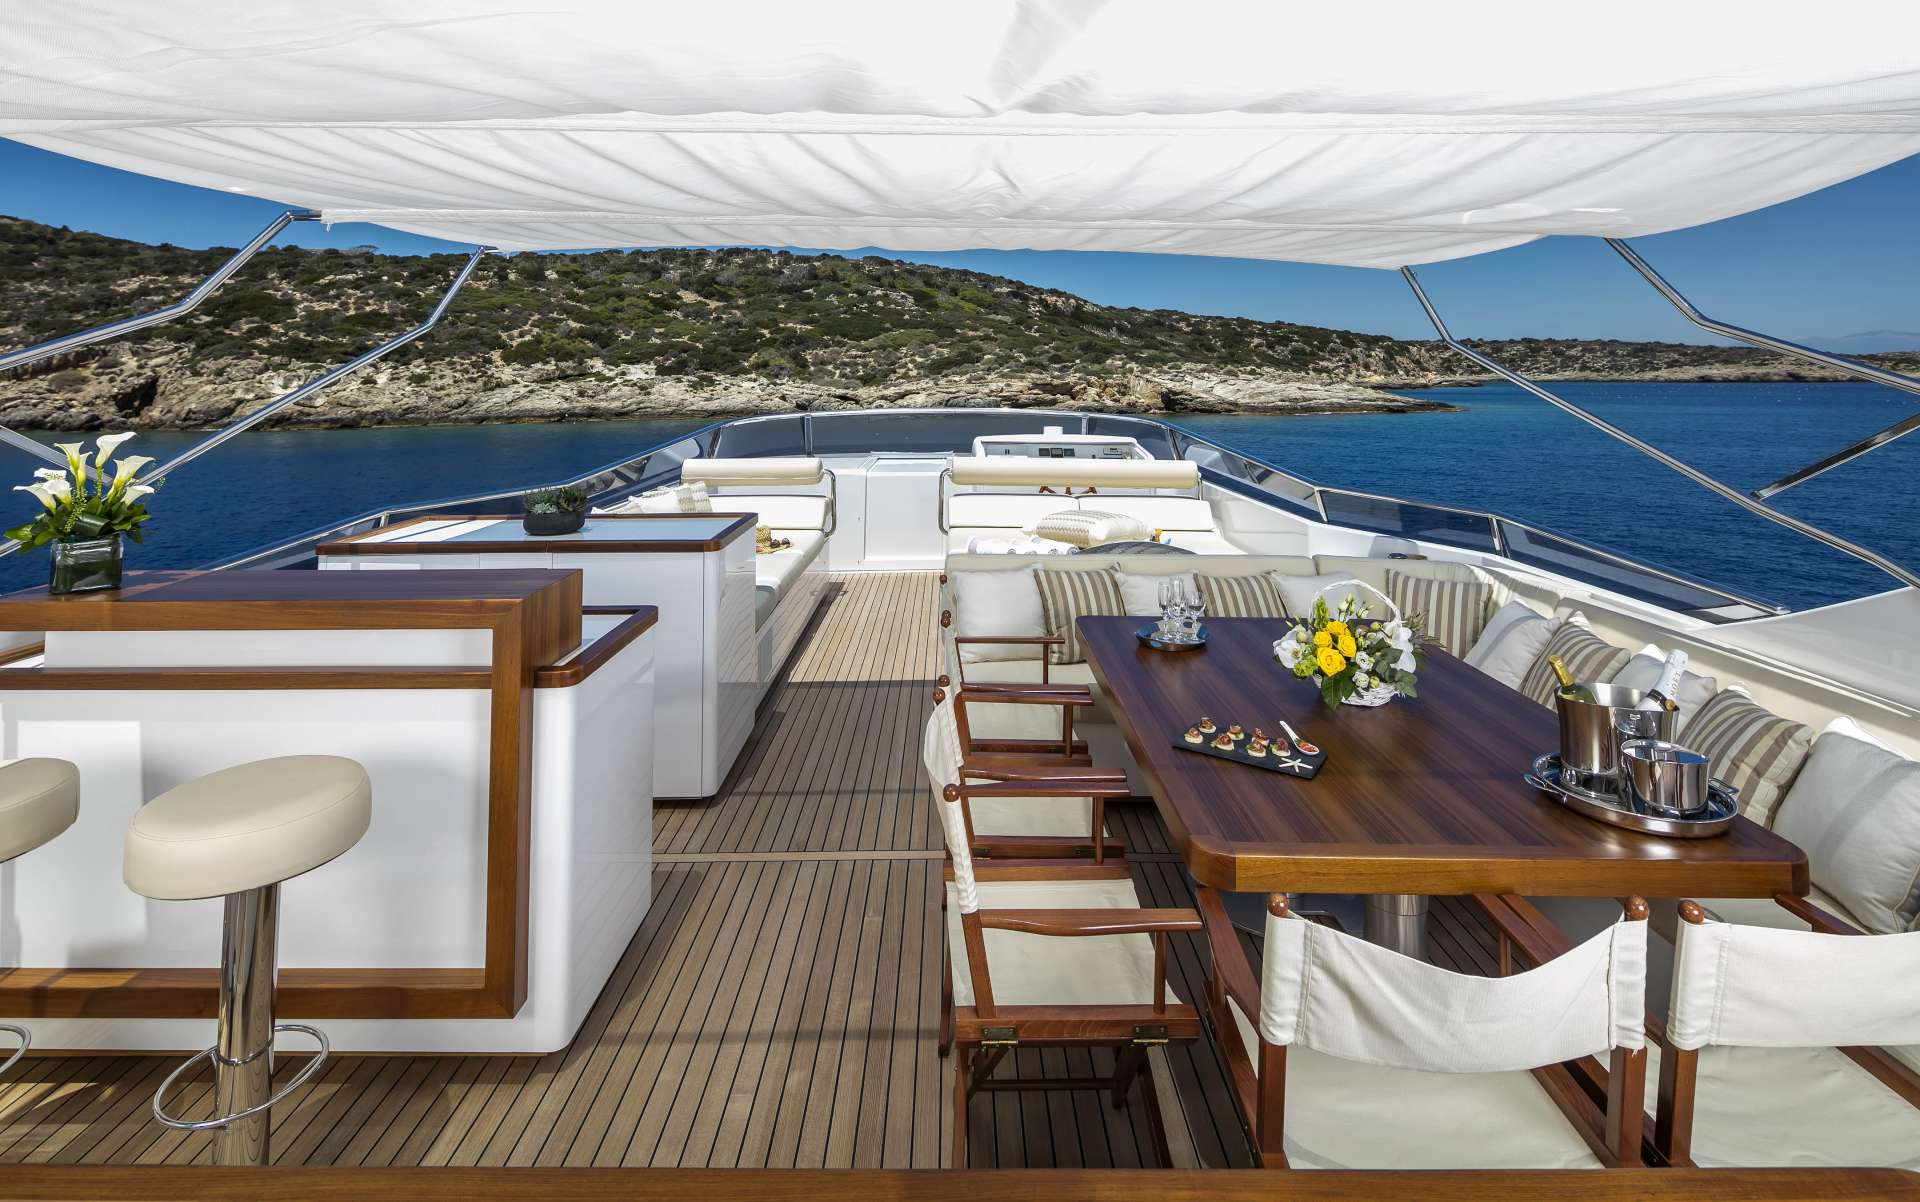 Motor Yacht 'ALEXIA AV' Sun Deck Dining table, 10 PAX, 6 Crew, 110.00 Ft, 33.00 Meters, Built 2006, Cantieri di Pisa, Italy, Refit Year 2017